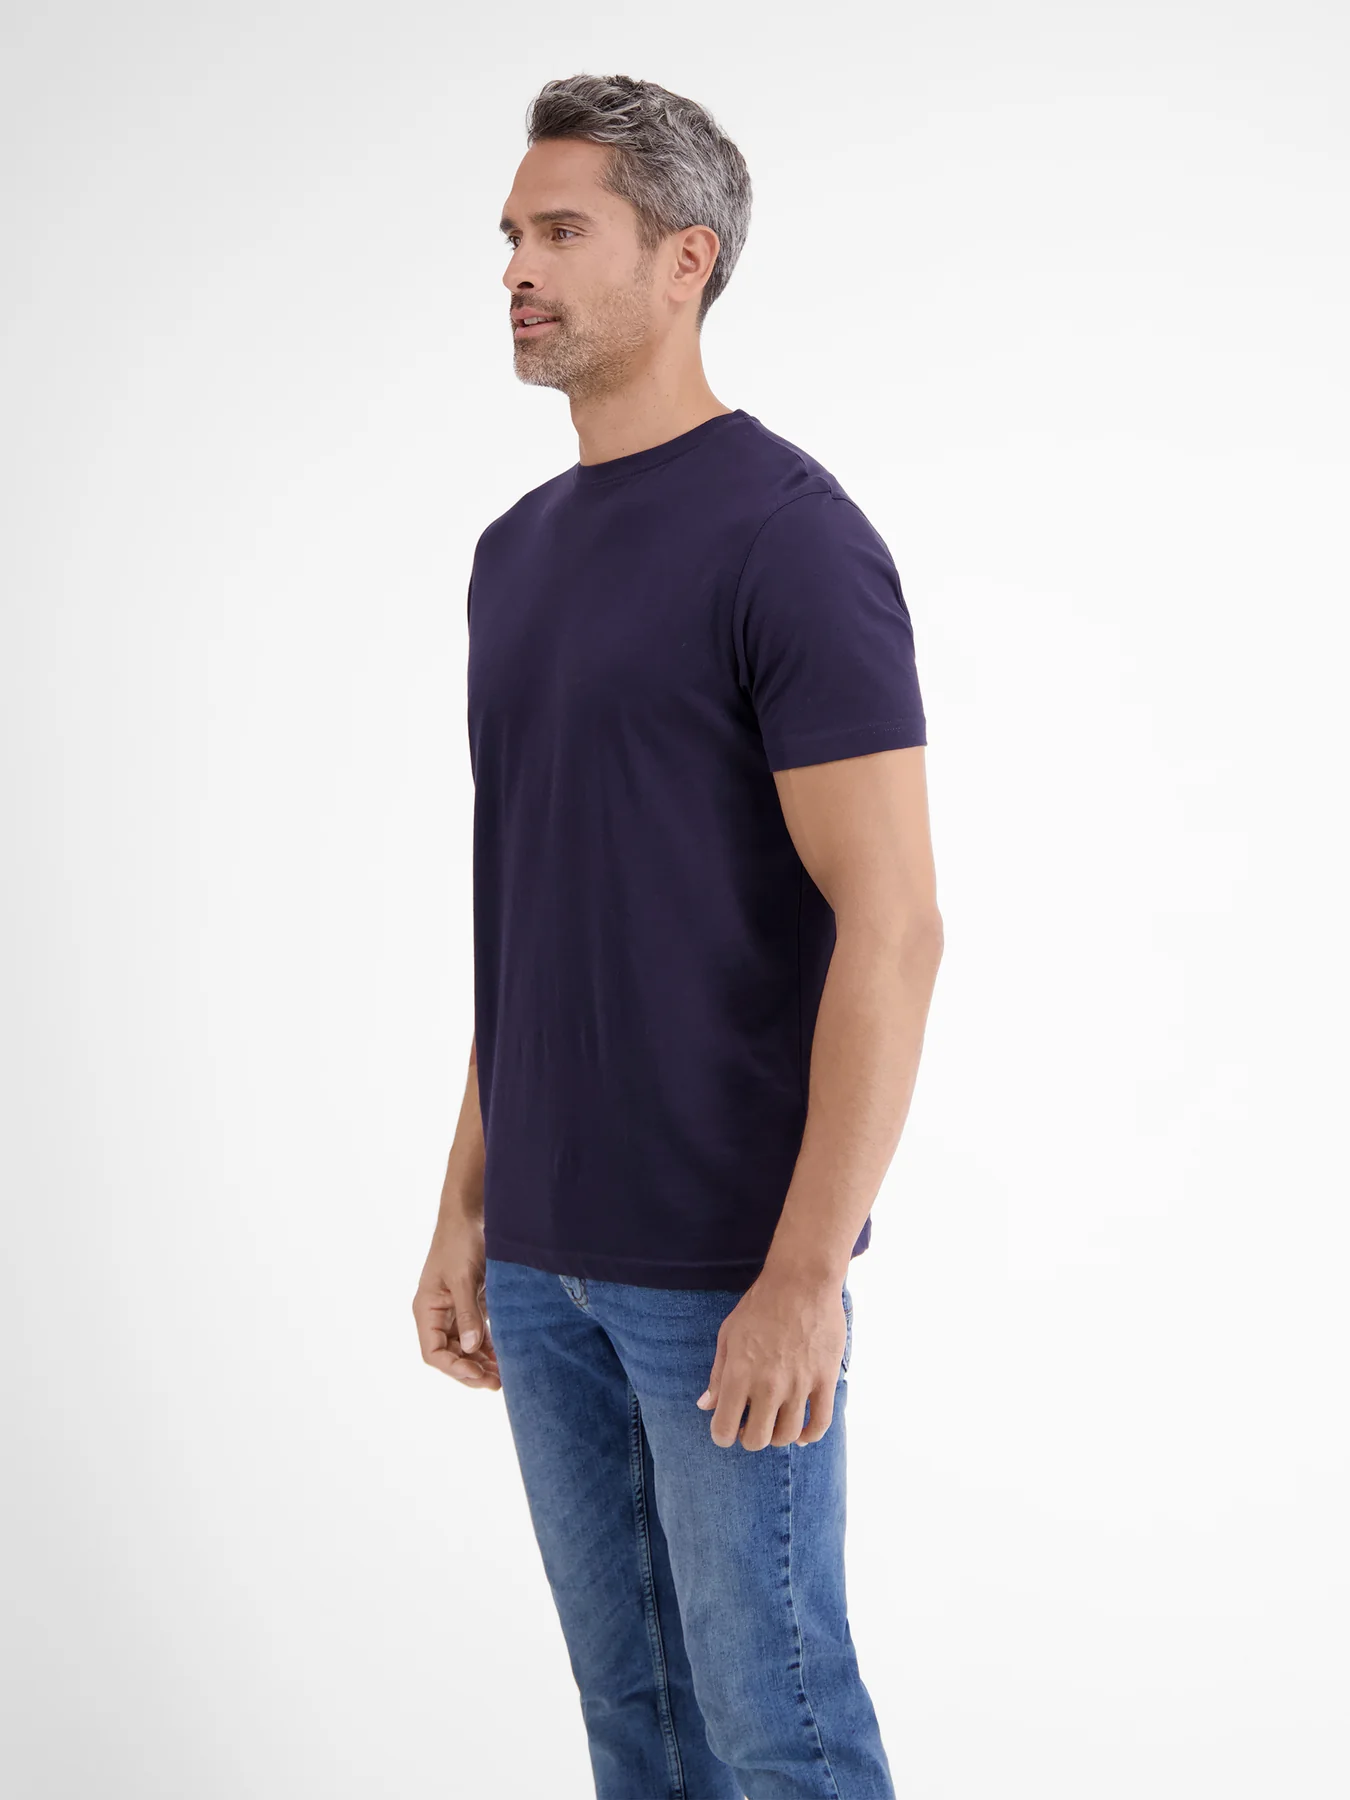 T-Shirts (Round Cotton | Navy LERROS Neckline) - - Two-Pack Blues